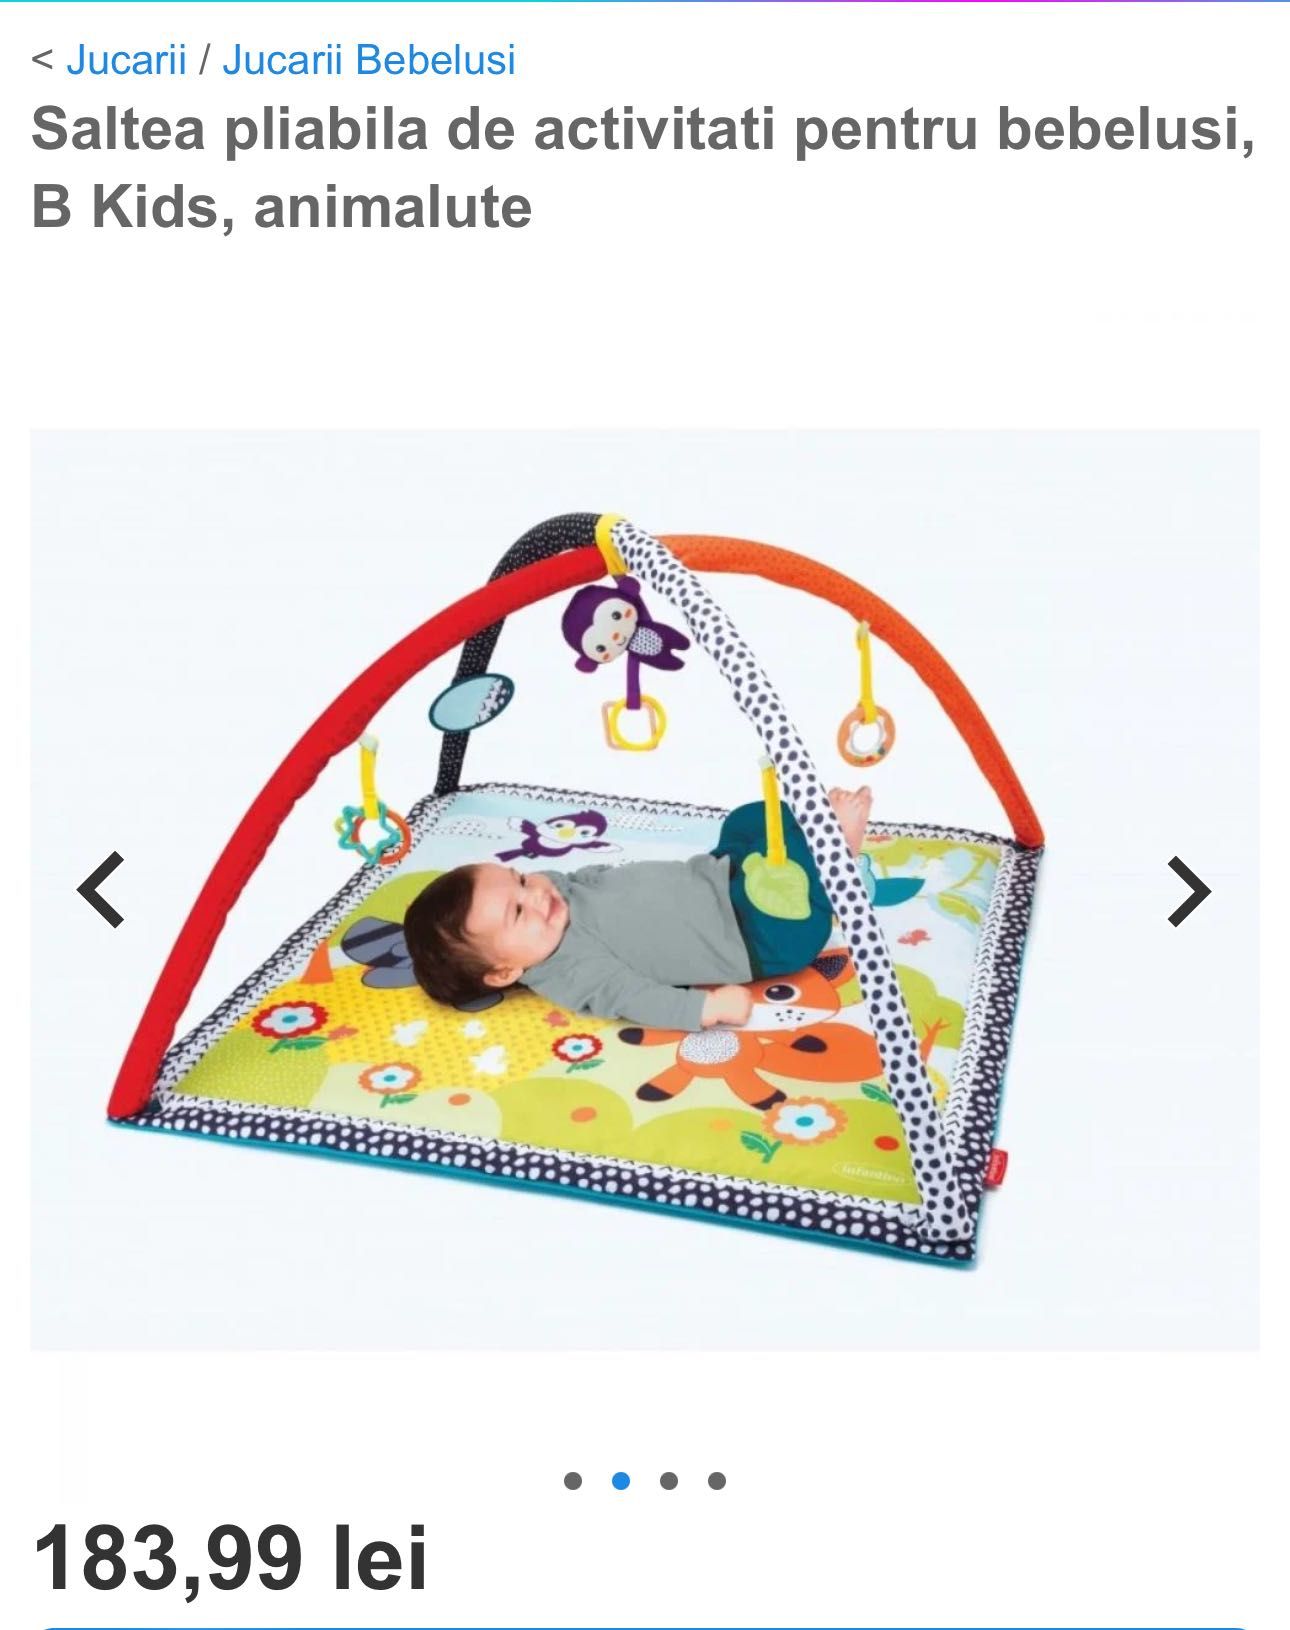 Saltea activitati bebeluși ,,Infantino” - model Safari.